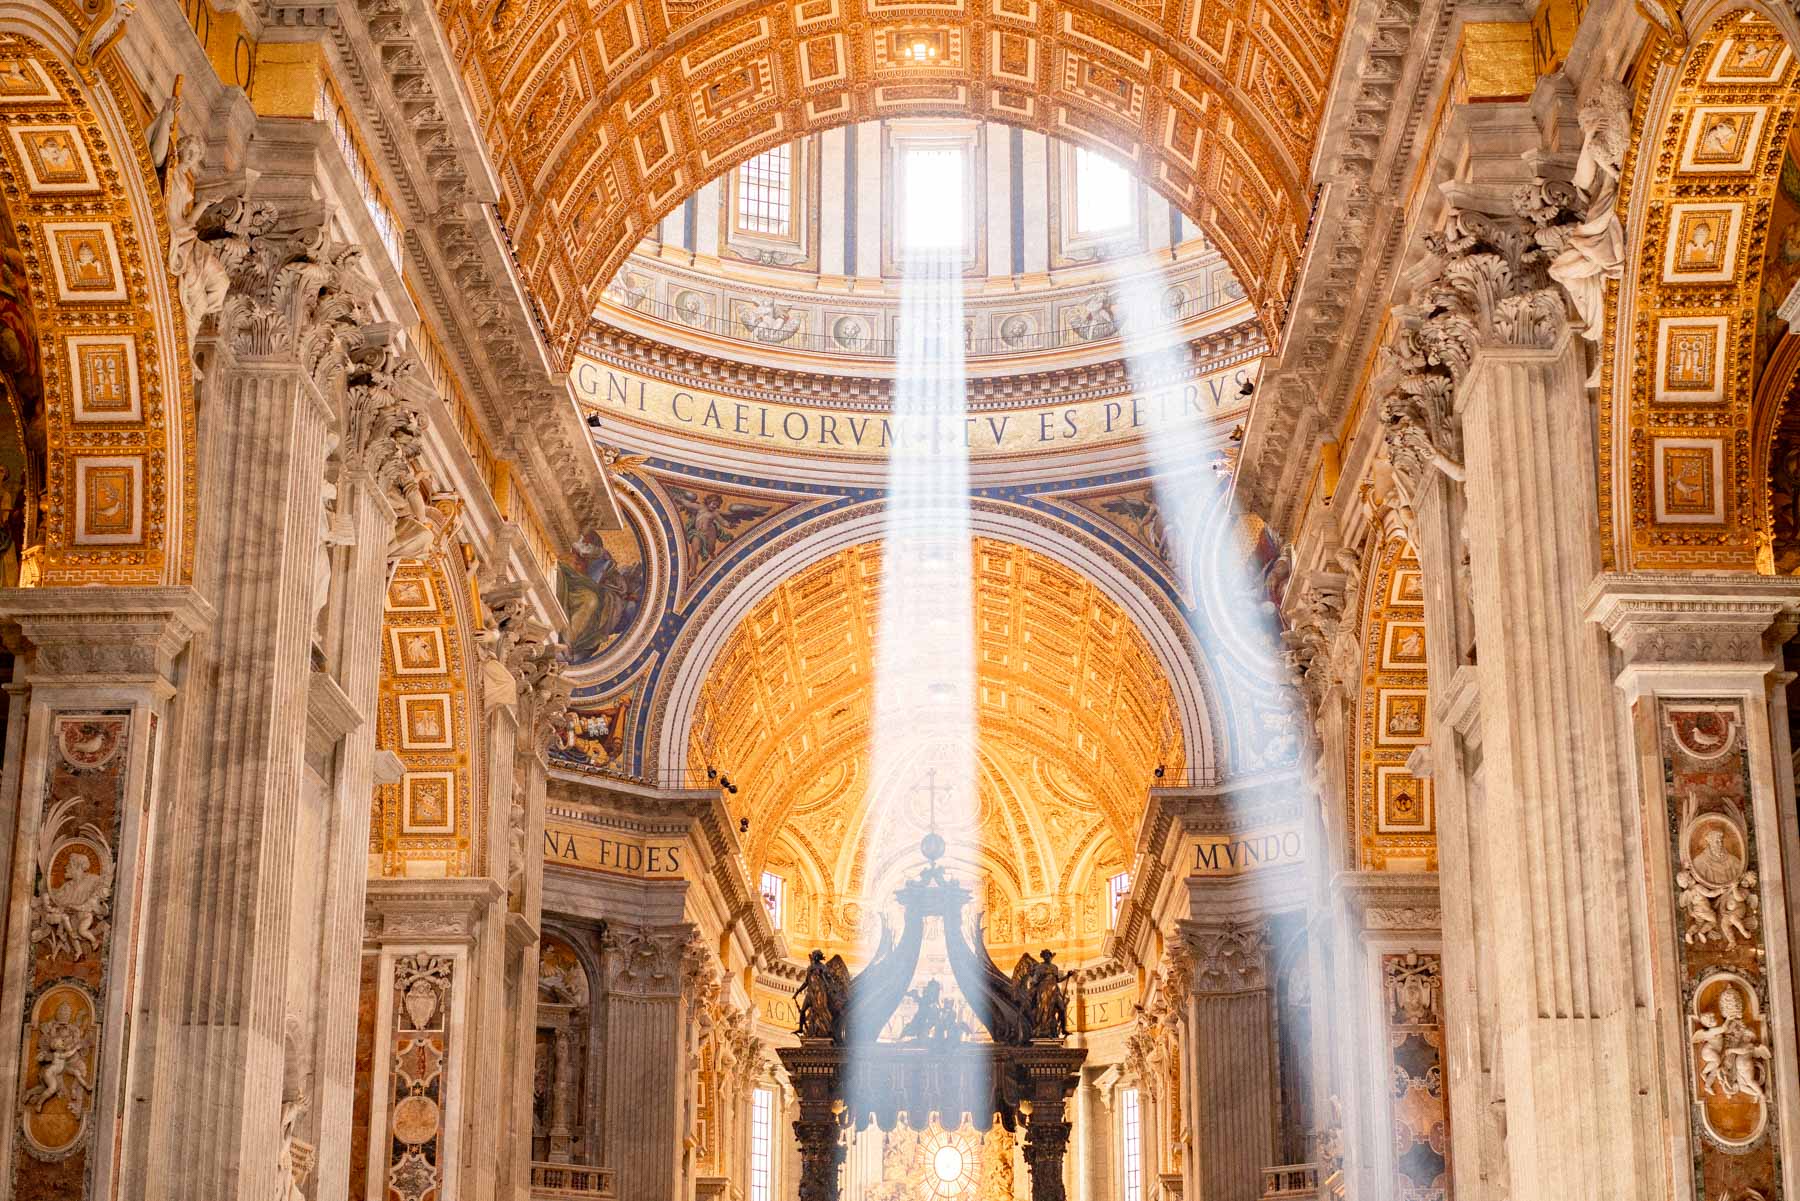 inside Saint Peters Basilica in Rome